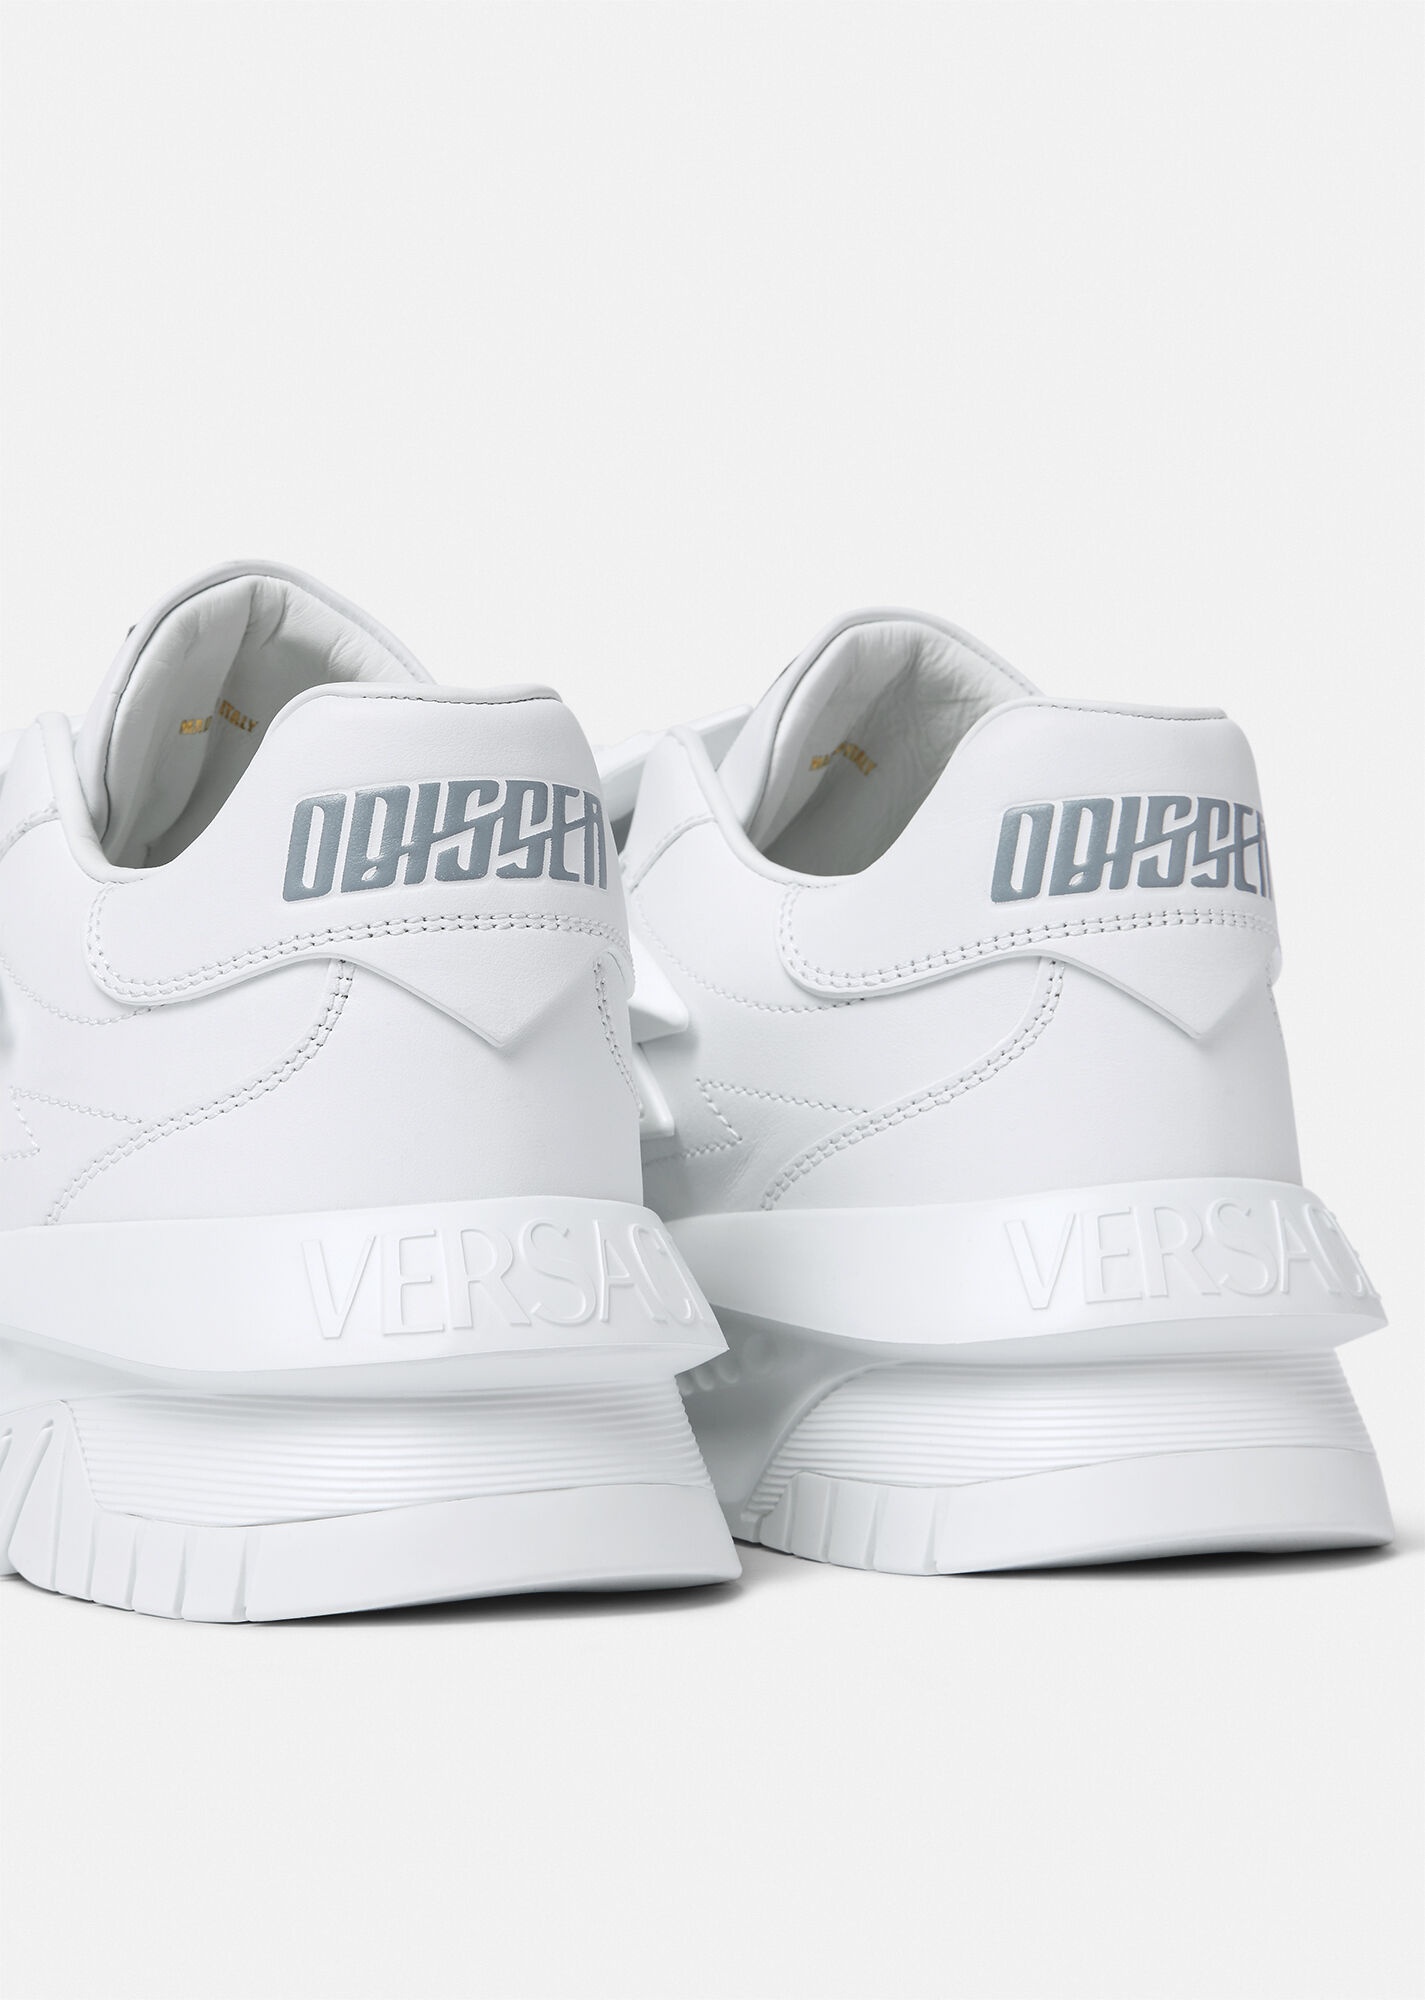 Odissea Sneakers - 5